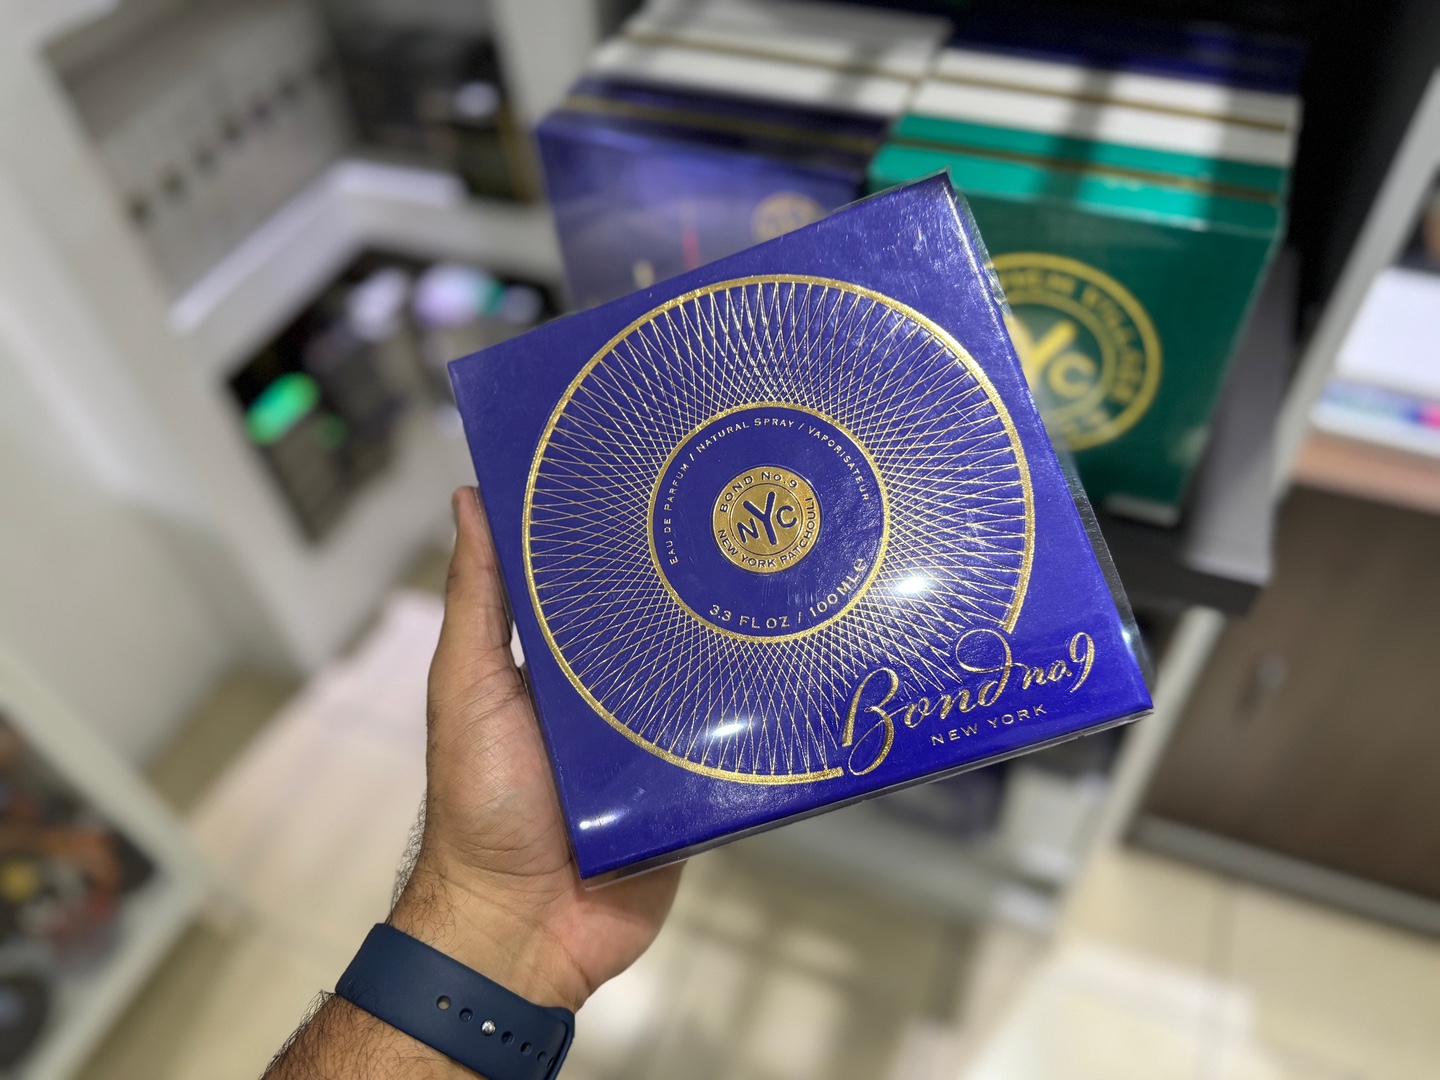 joyas, relojes y accesorios - Perfume Bond No. 9 NYC New York Patchouli 100% Original, RD$ 16,500 NEG